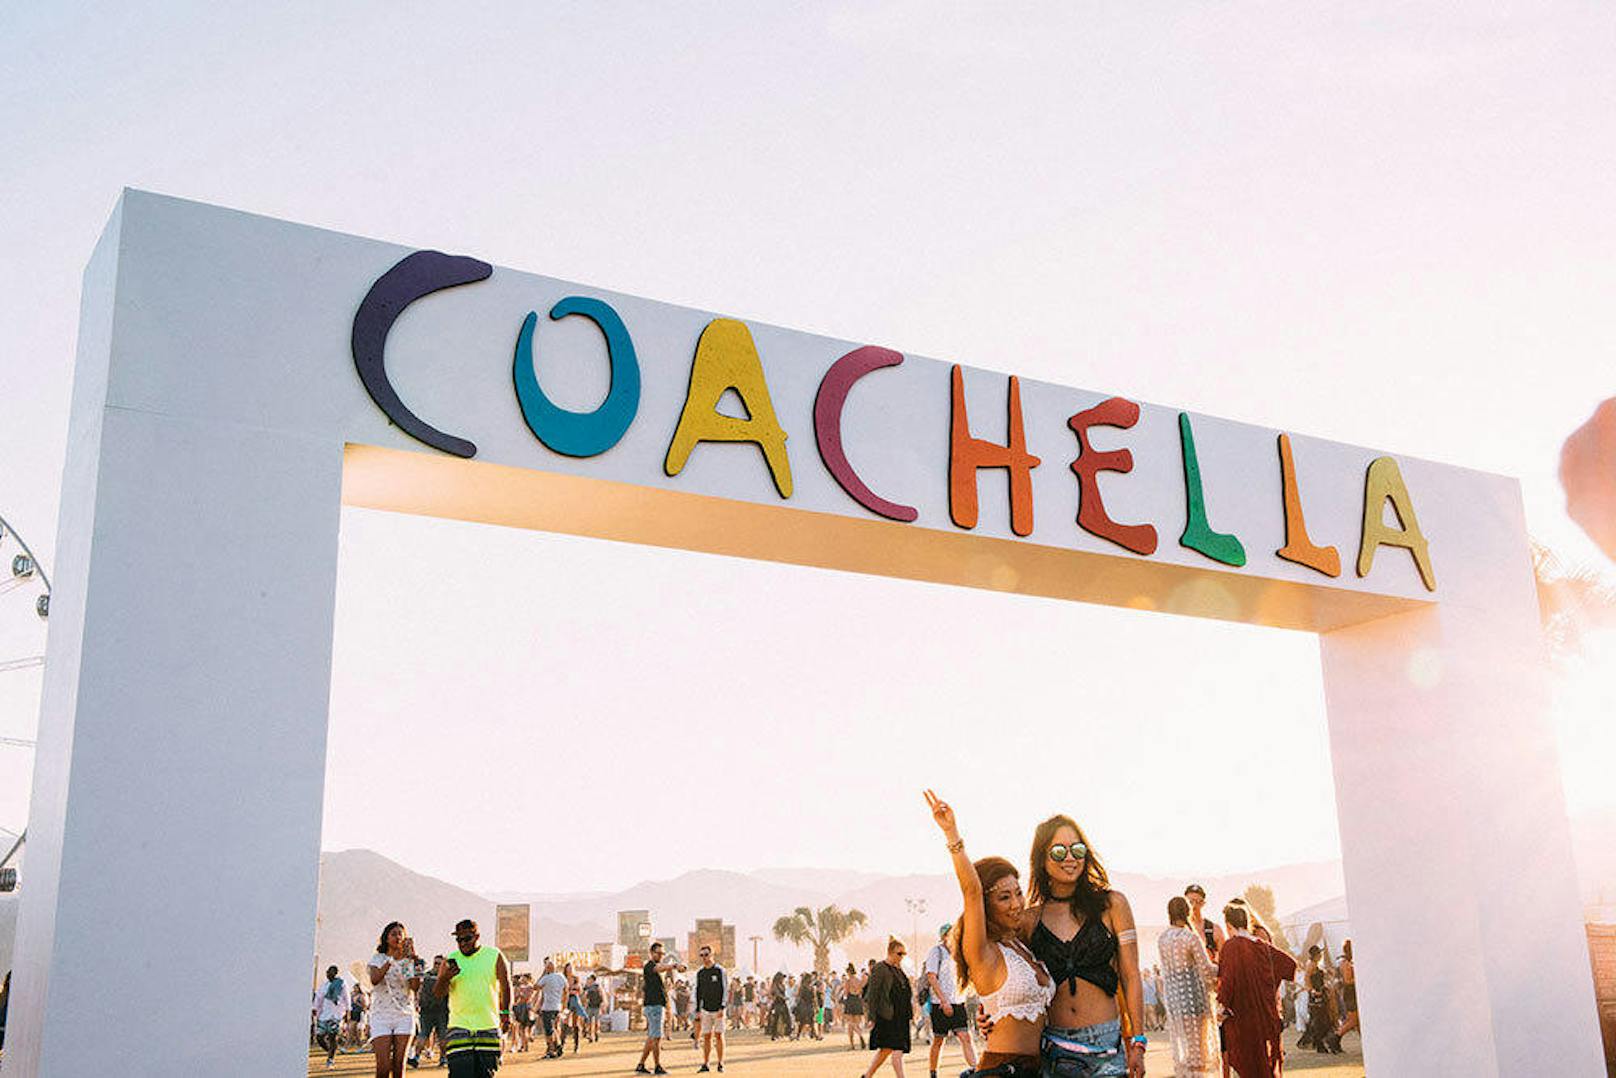 Das Coachella-Musikfestival